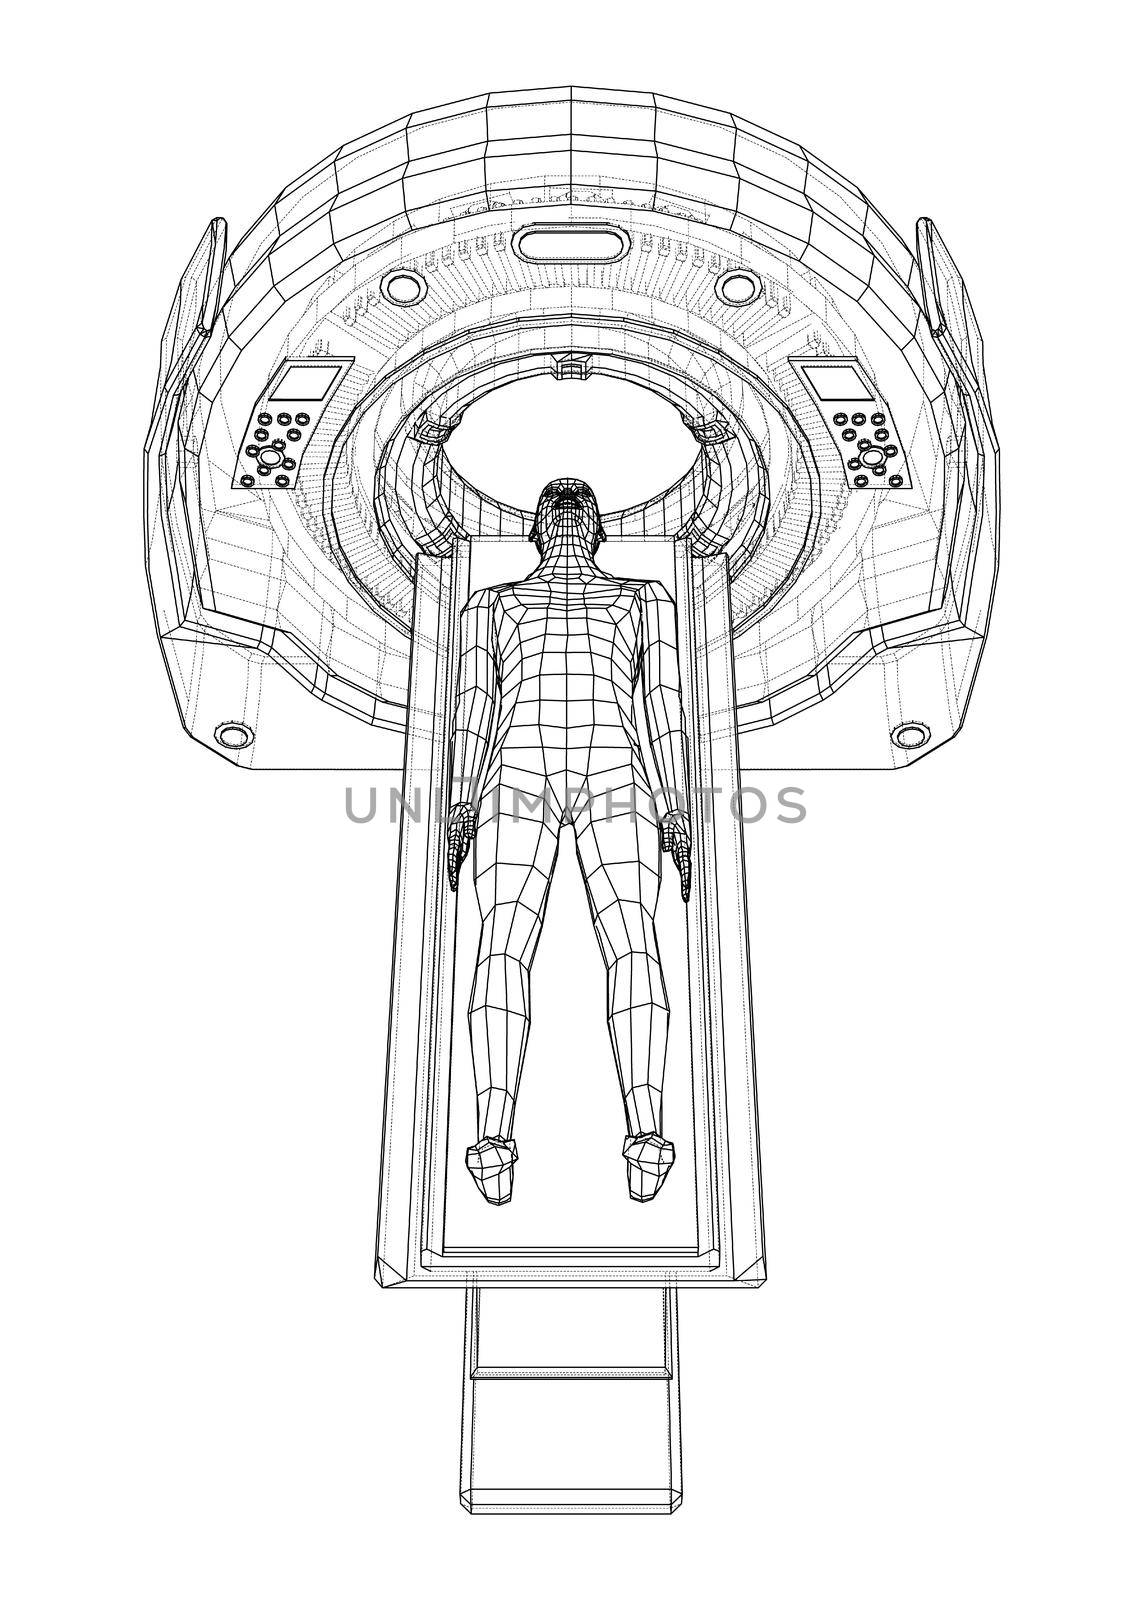 MRI, magnetic resonance imaging machine scanning patient inside. 3d illustration